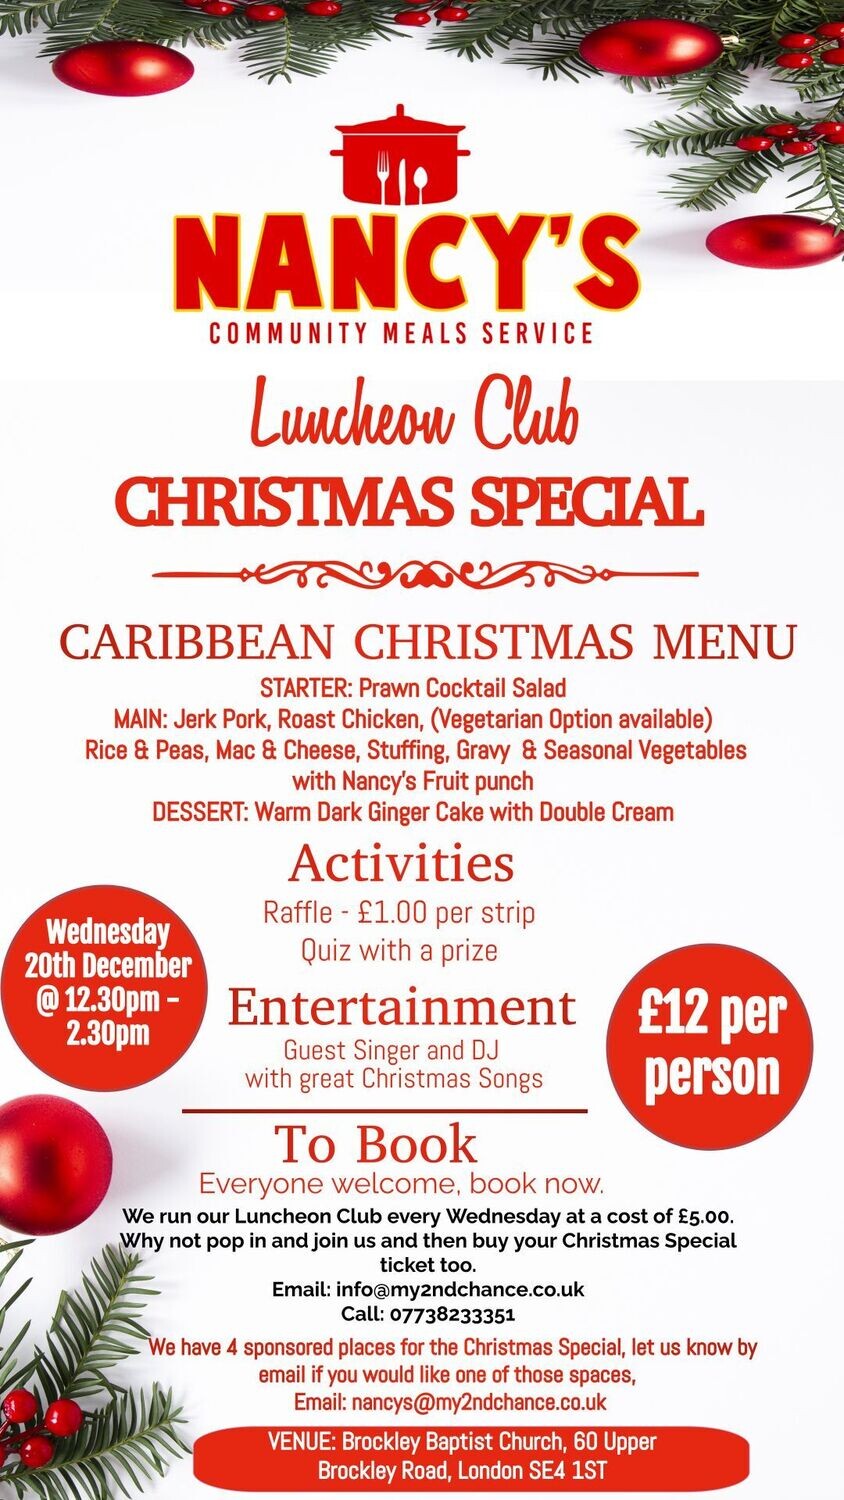 NCMS Christmas Special - Luncheon Club